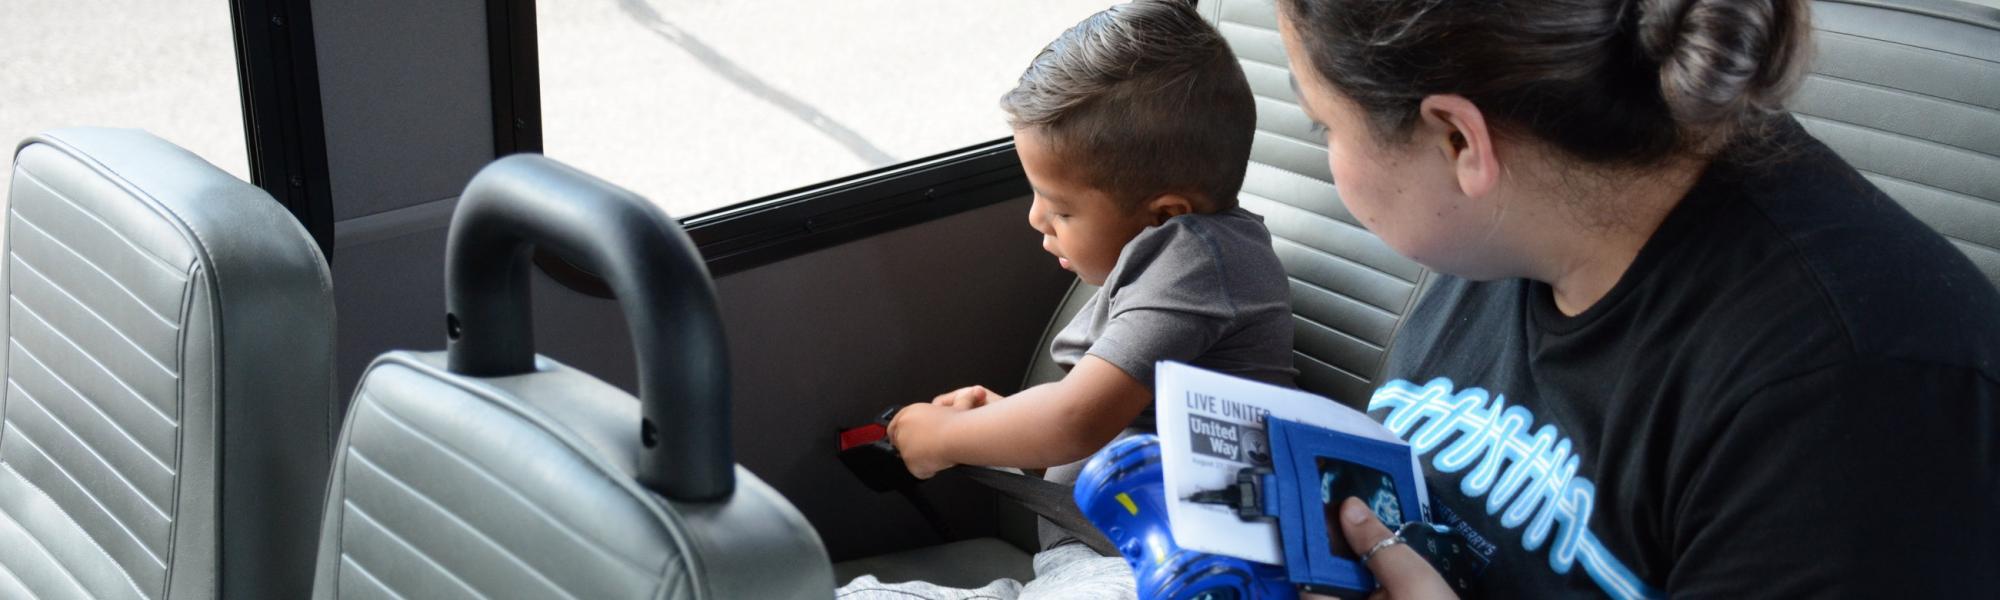 Preschool boy buckling his seatbelt on the bus.